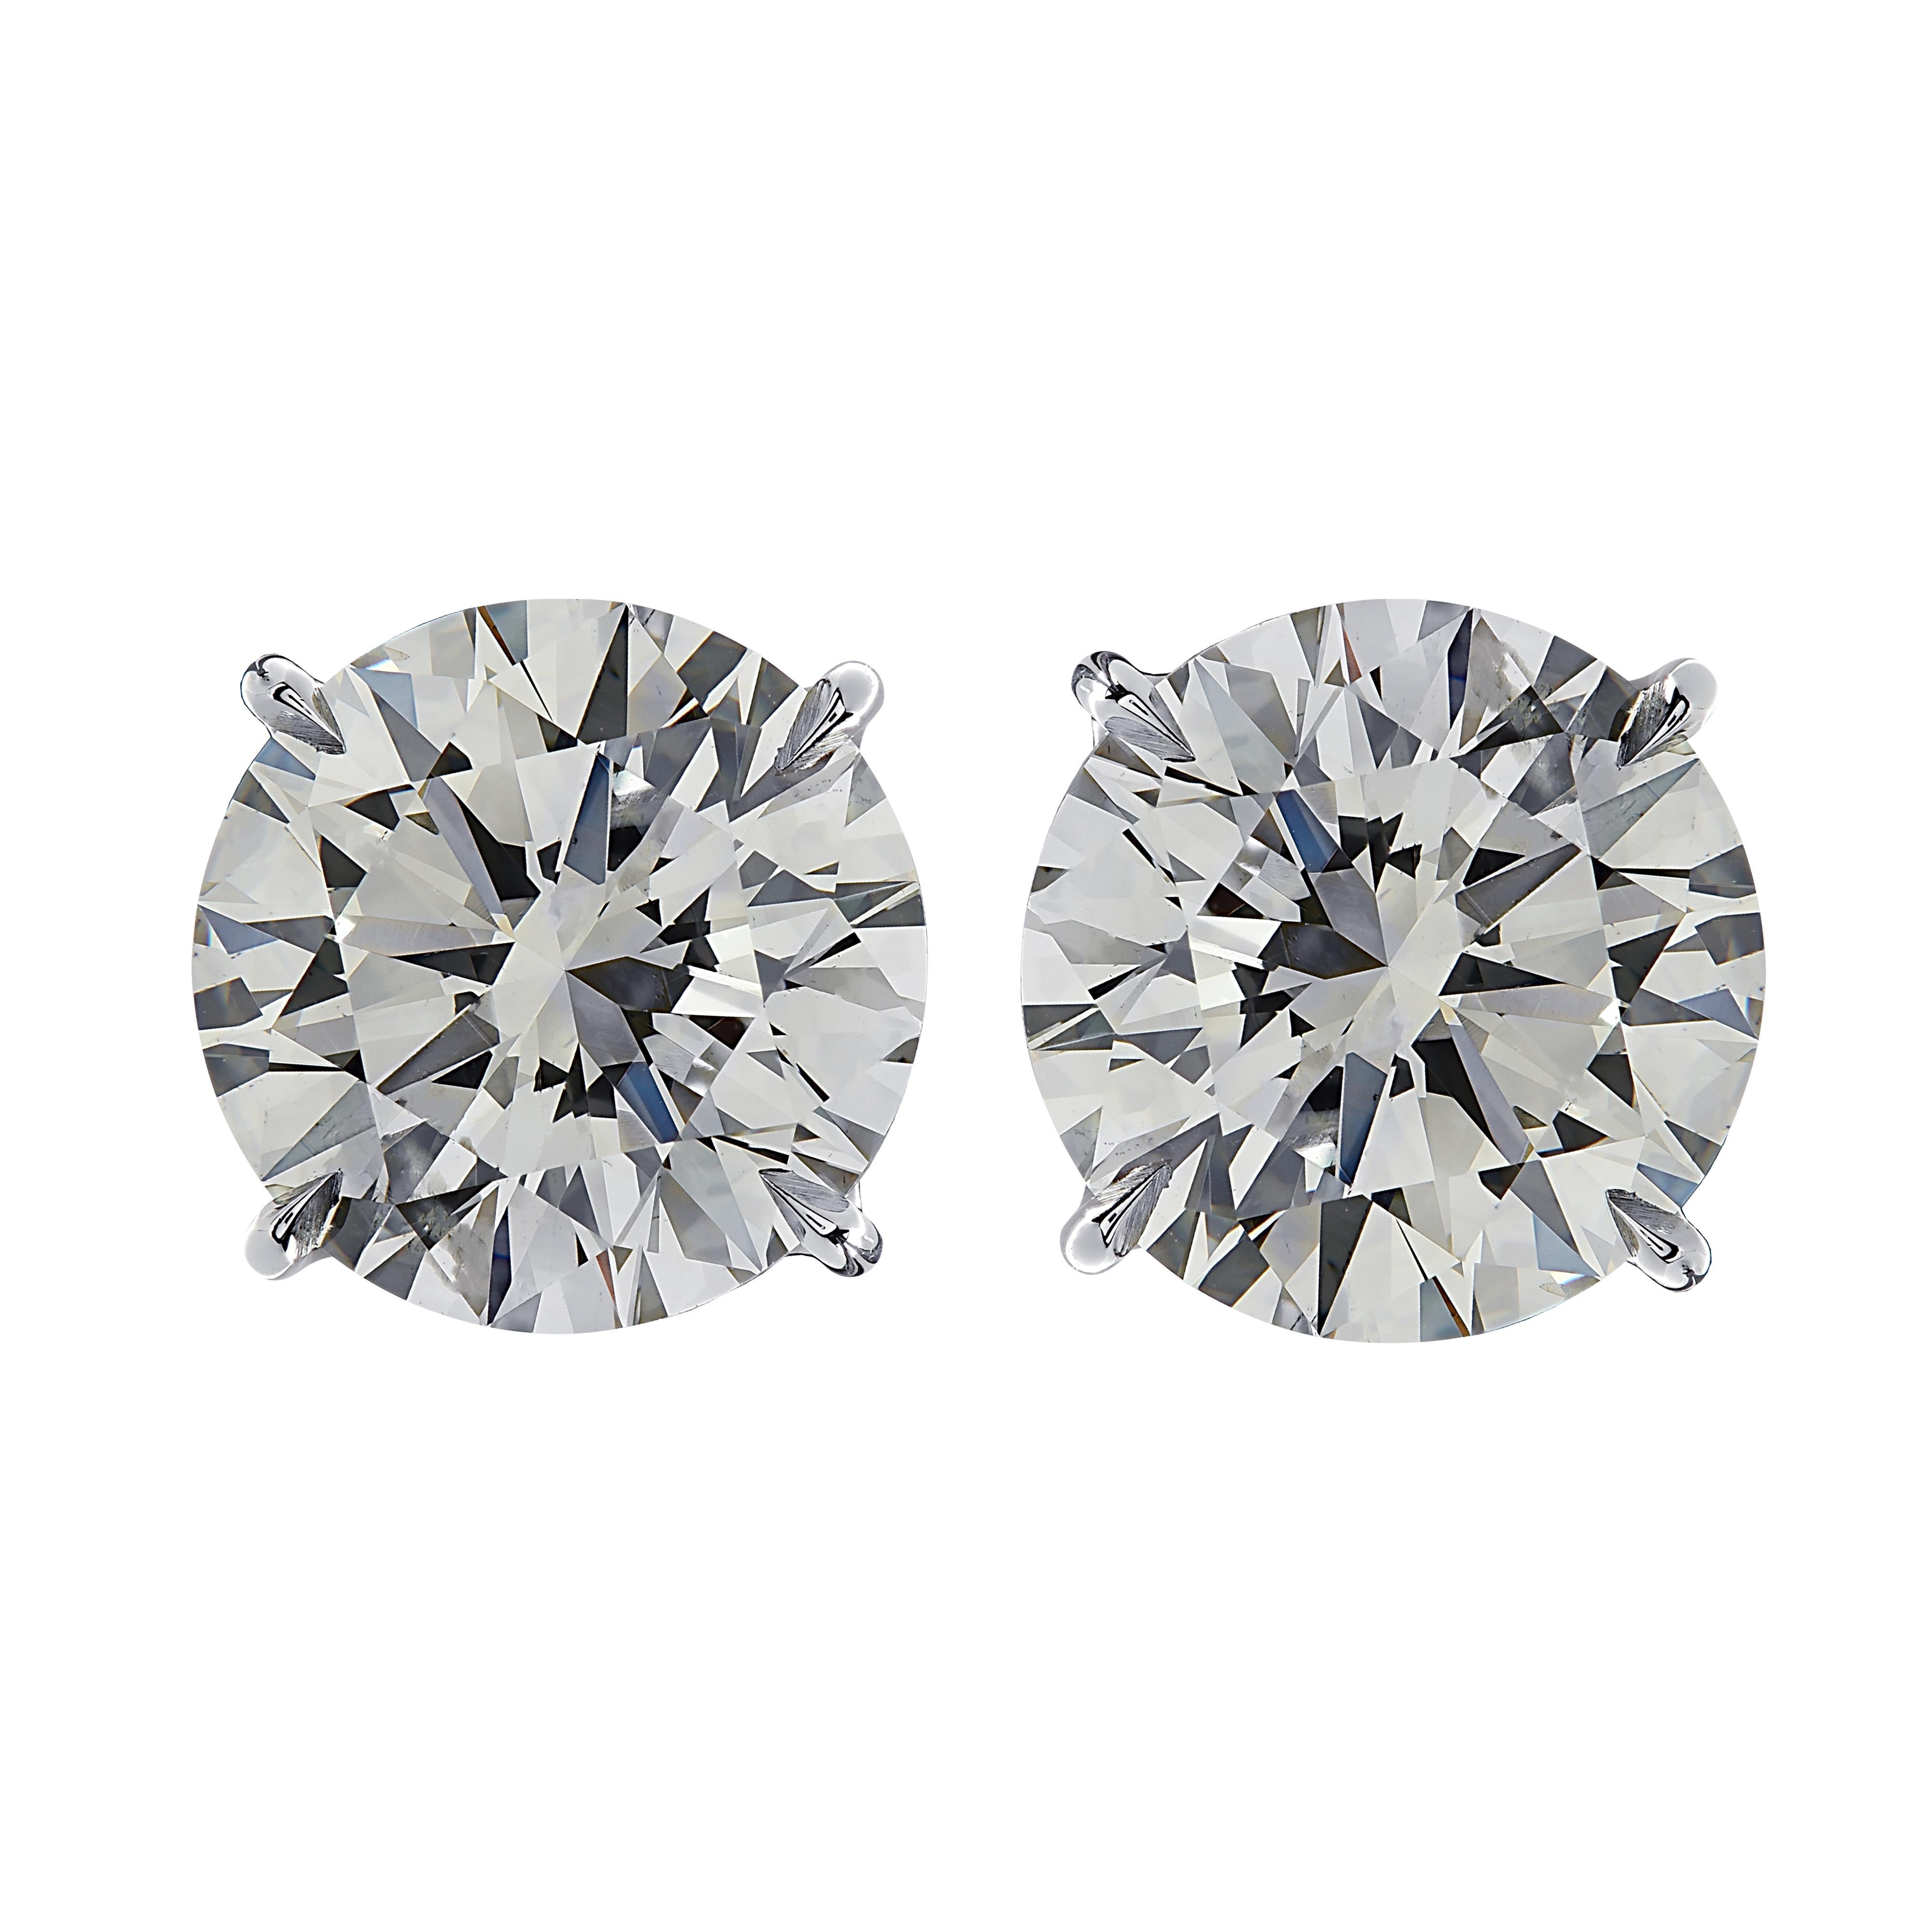 Round Cut Vivid Diamonds 15.77 Carat Diamond Earrings